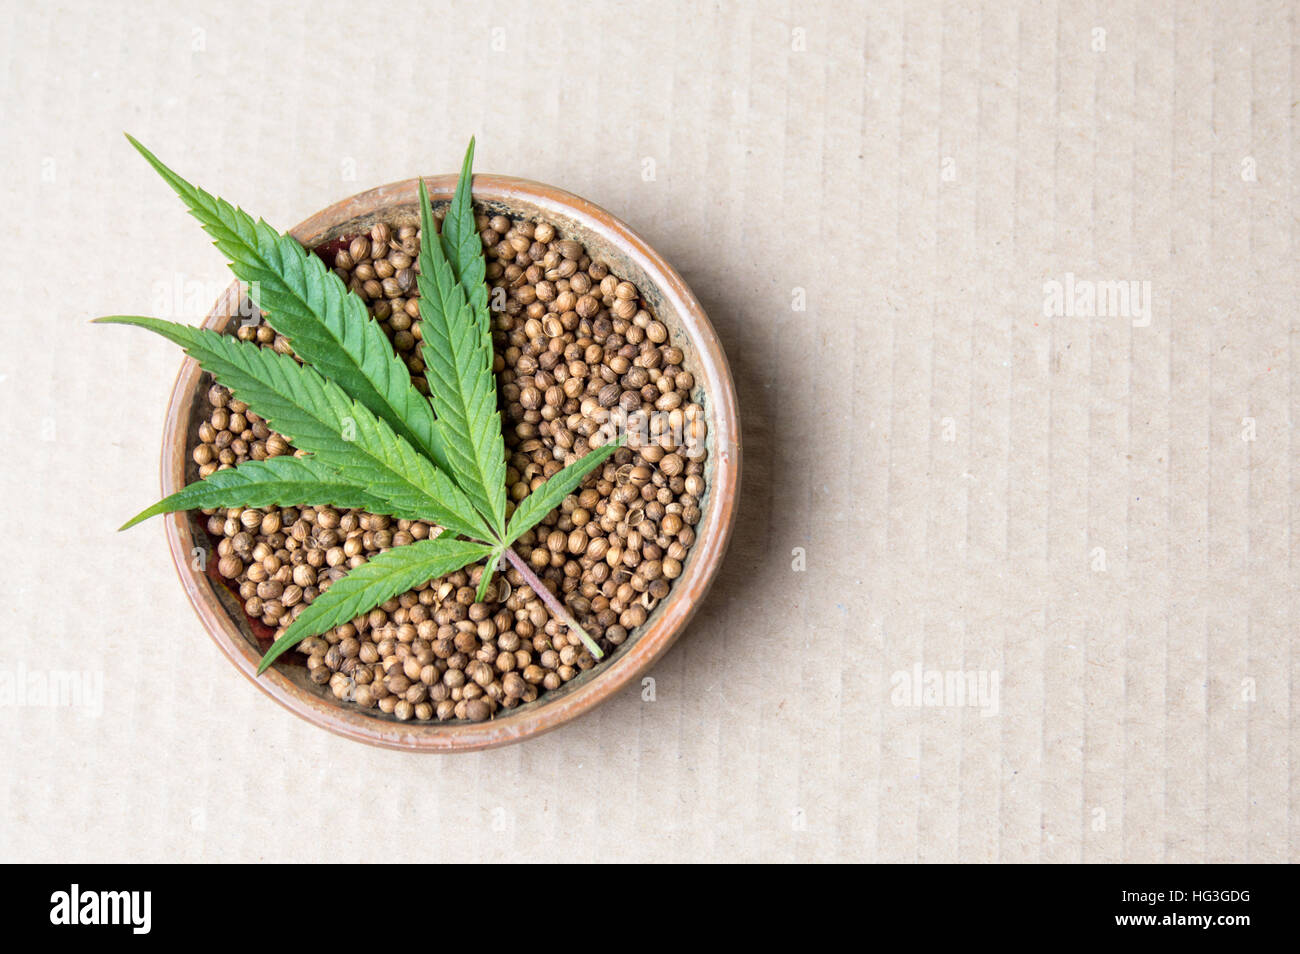 Marijuana plant and cannabis seeds on a plate Stock Photo